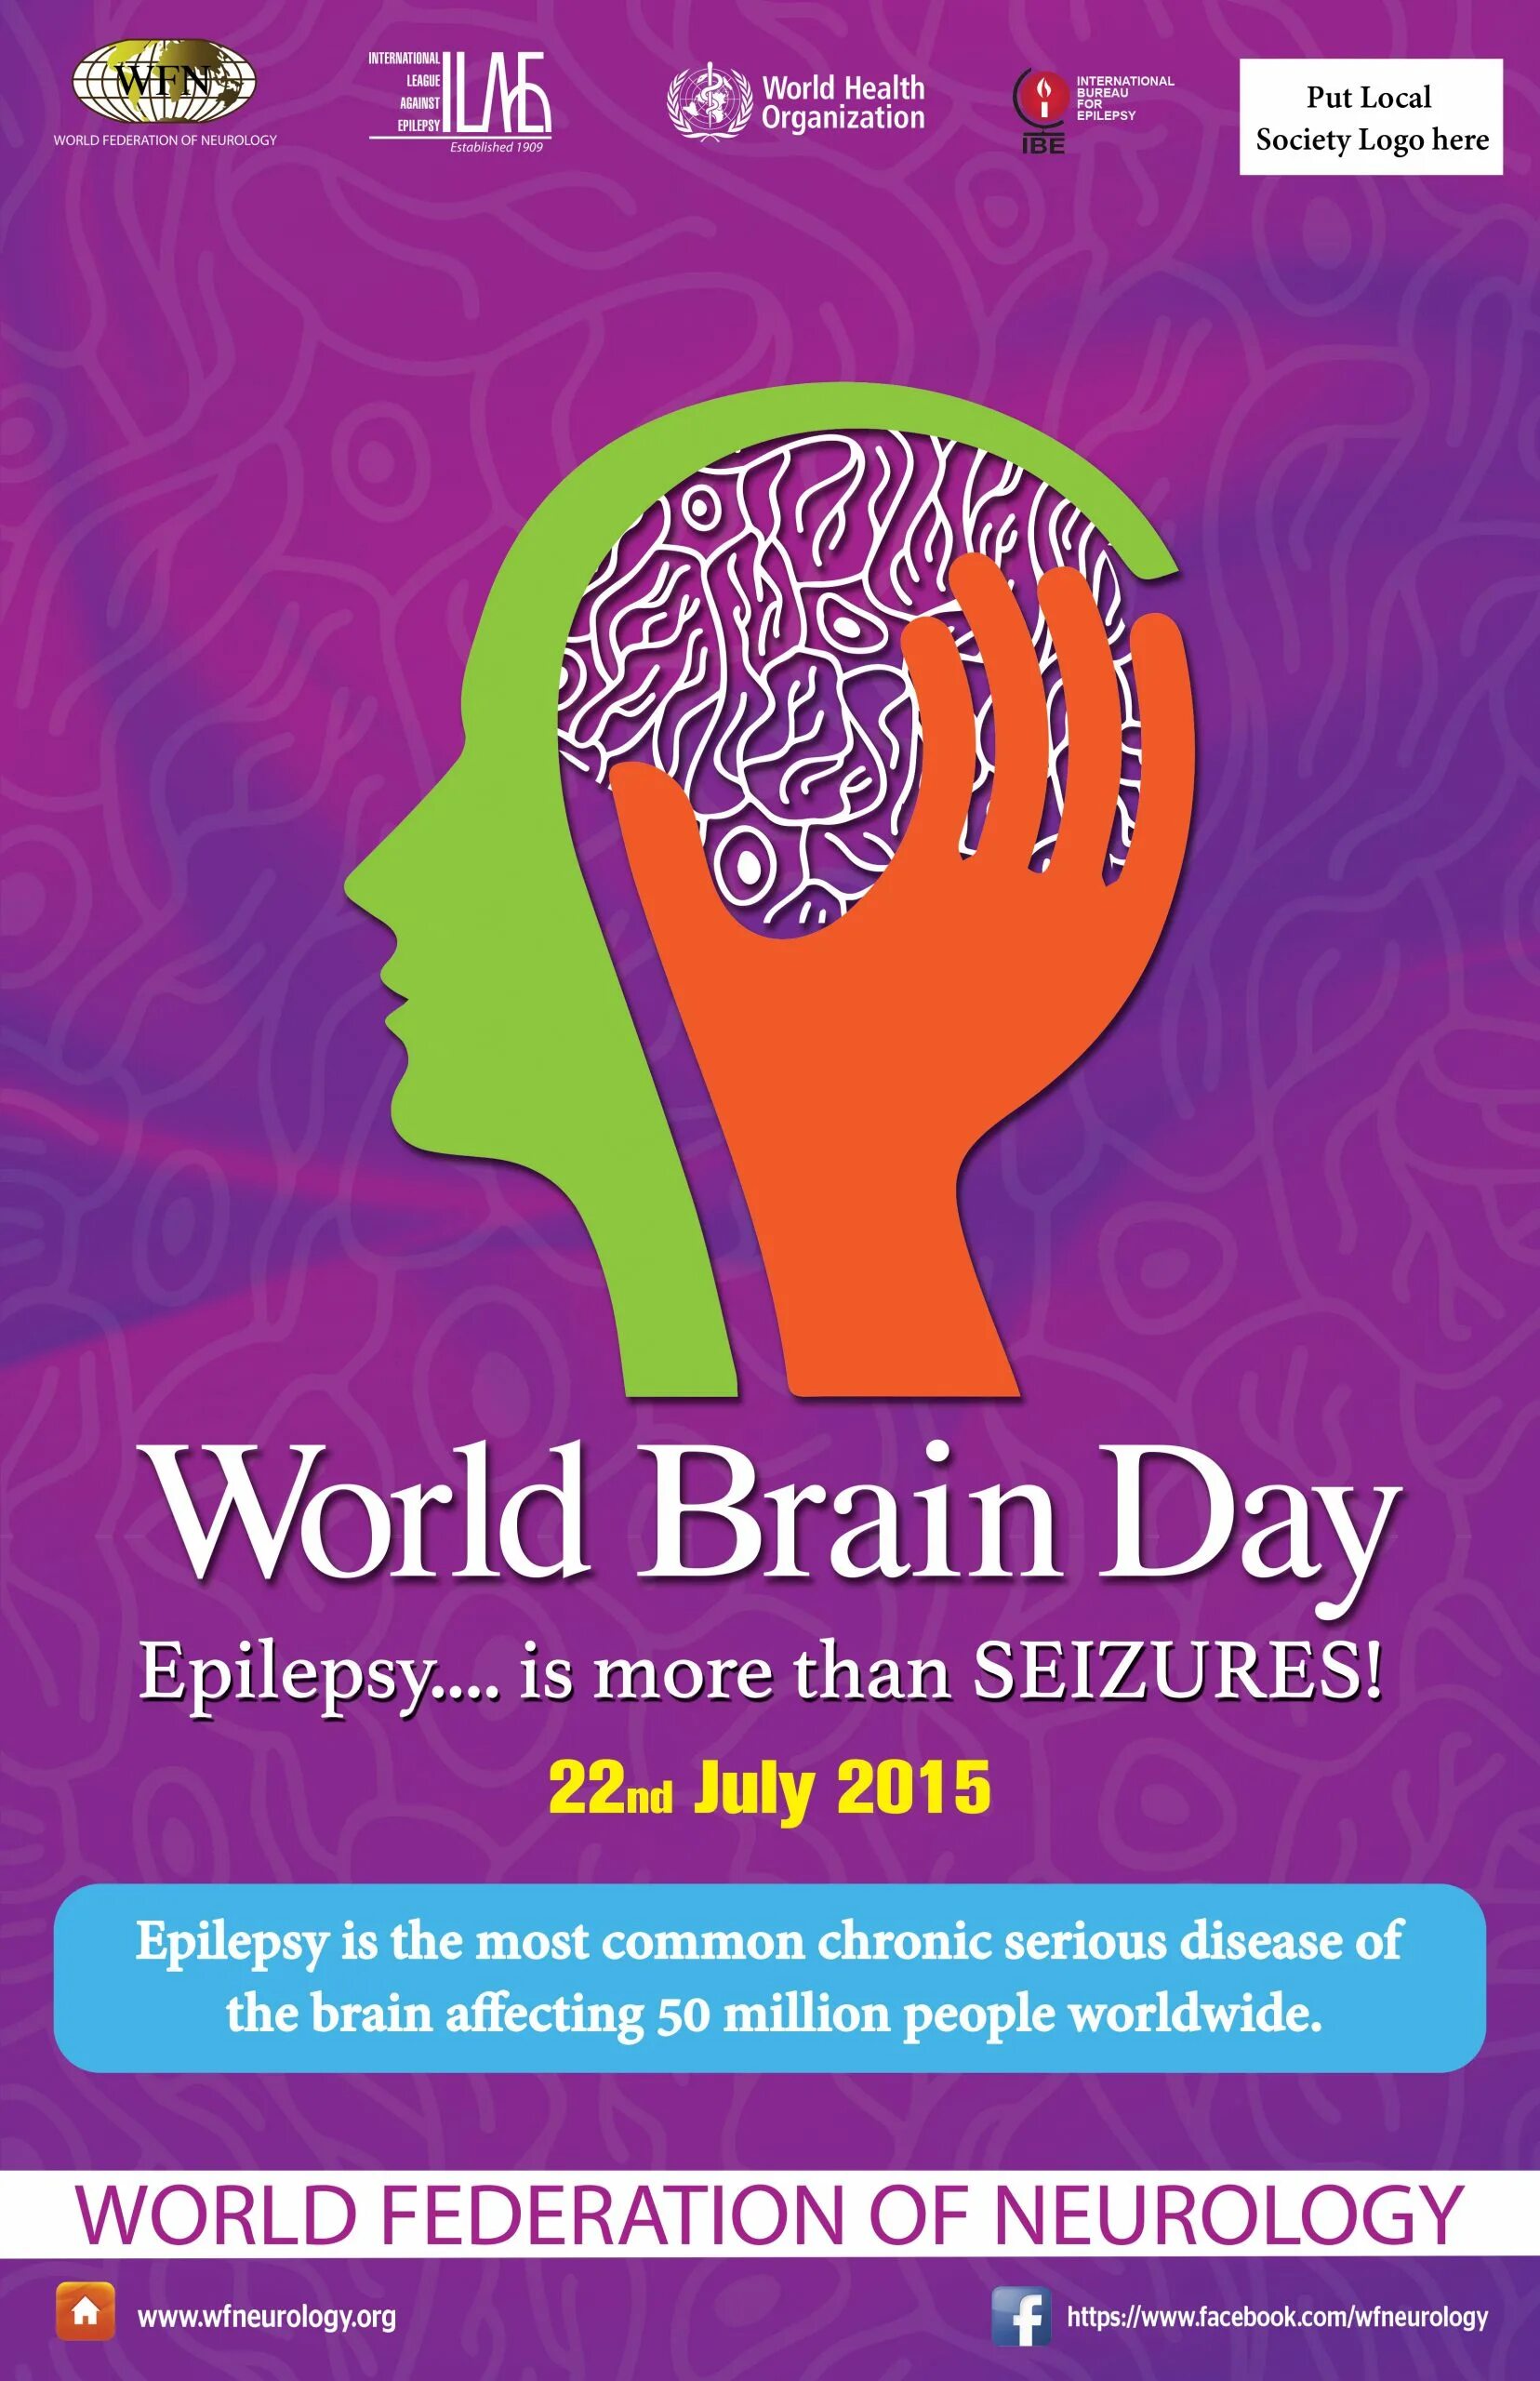 World brain. World Brain Day. Brain Day. The World for Brain. The International Bureau for Epilepsy (IBE).